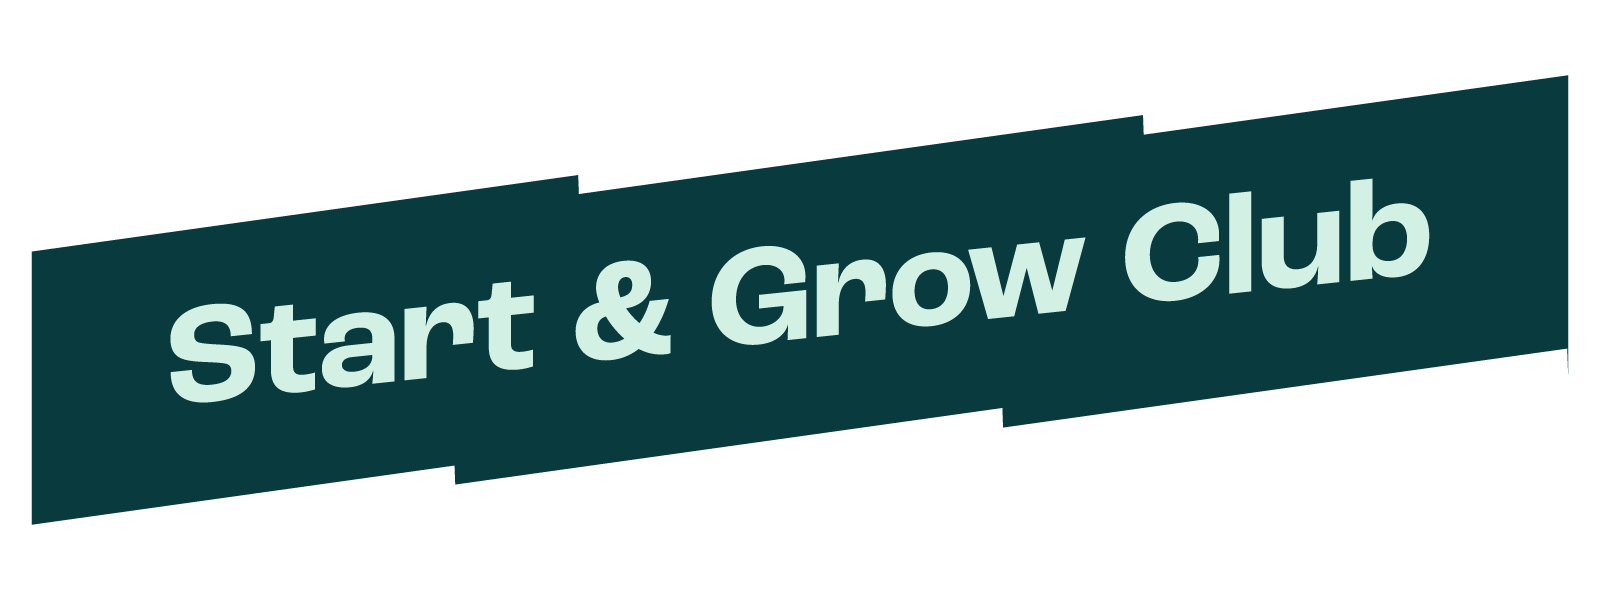 Start & Grow Club Logo